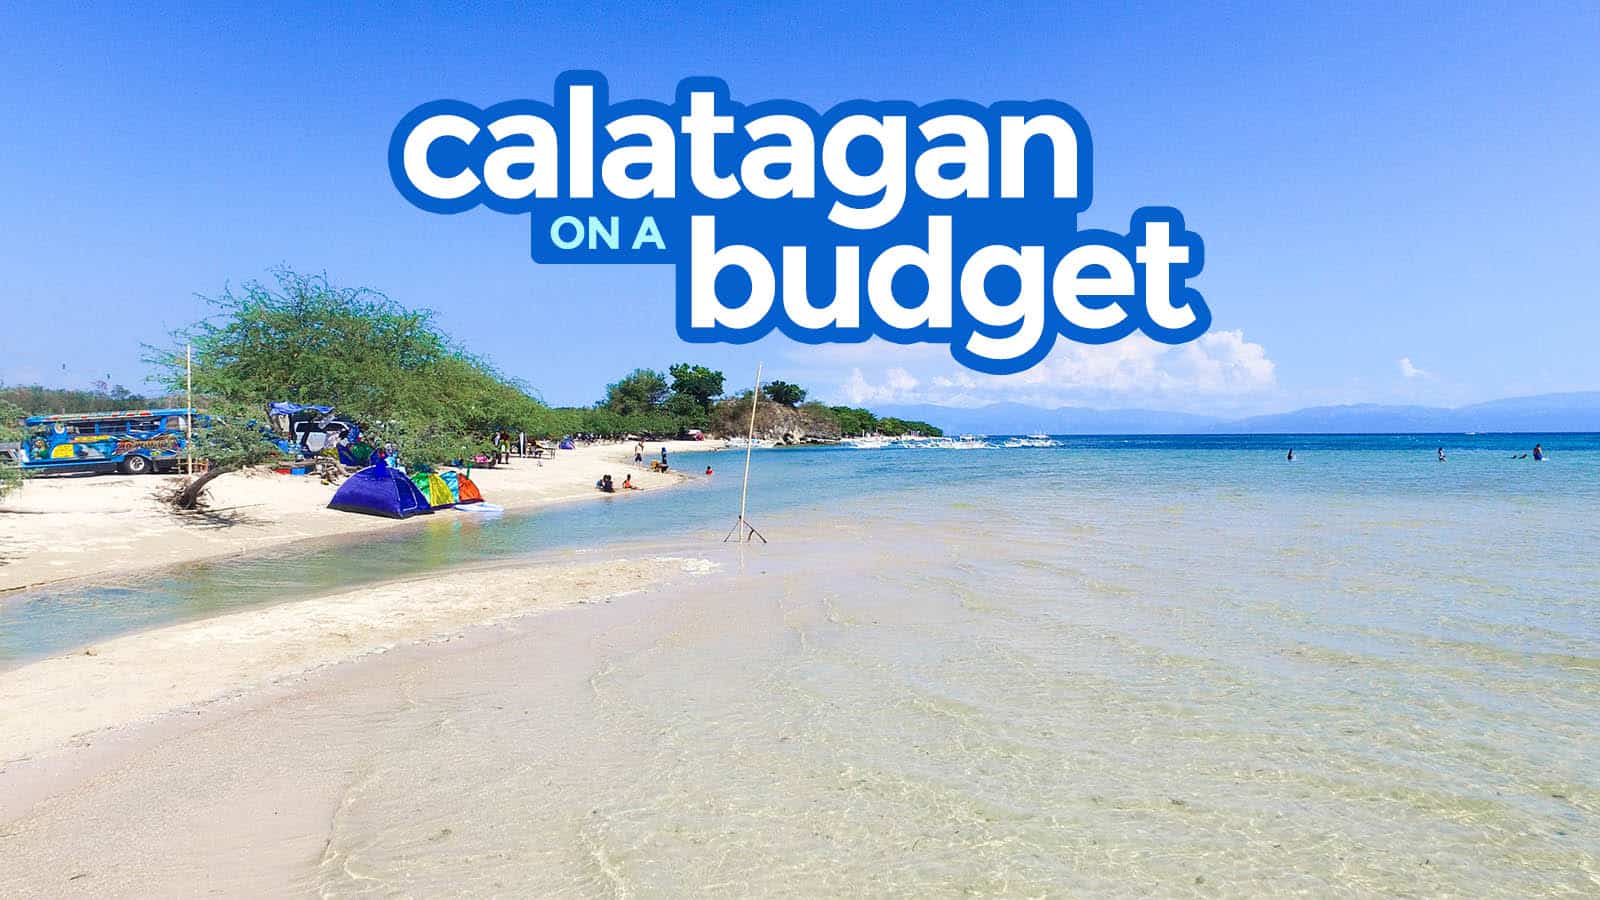 CALATAGAN, BATANGAS: Travel Guide with Budget Itinerary